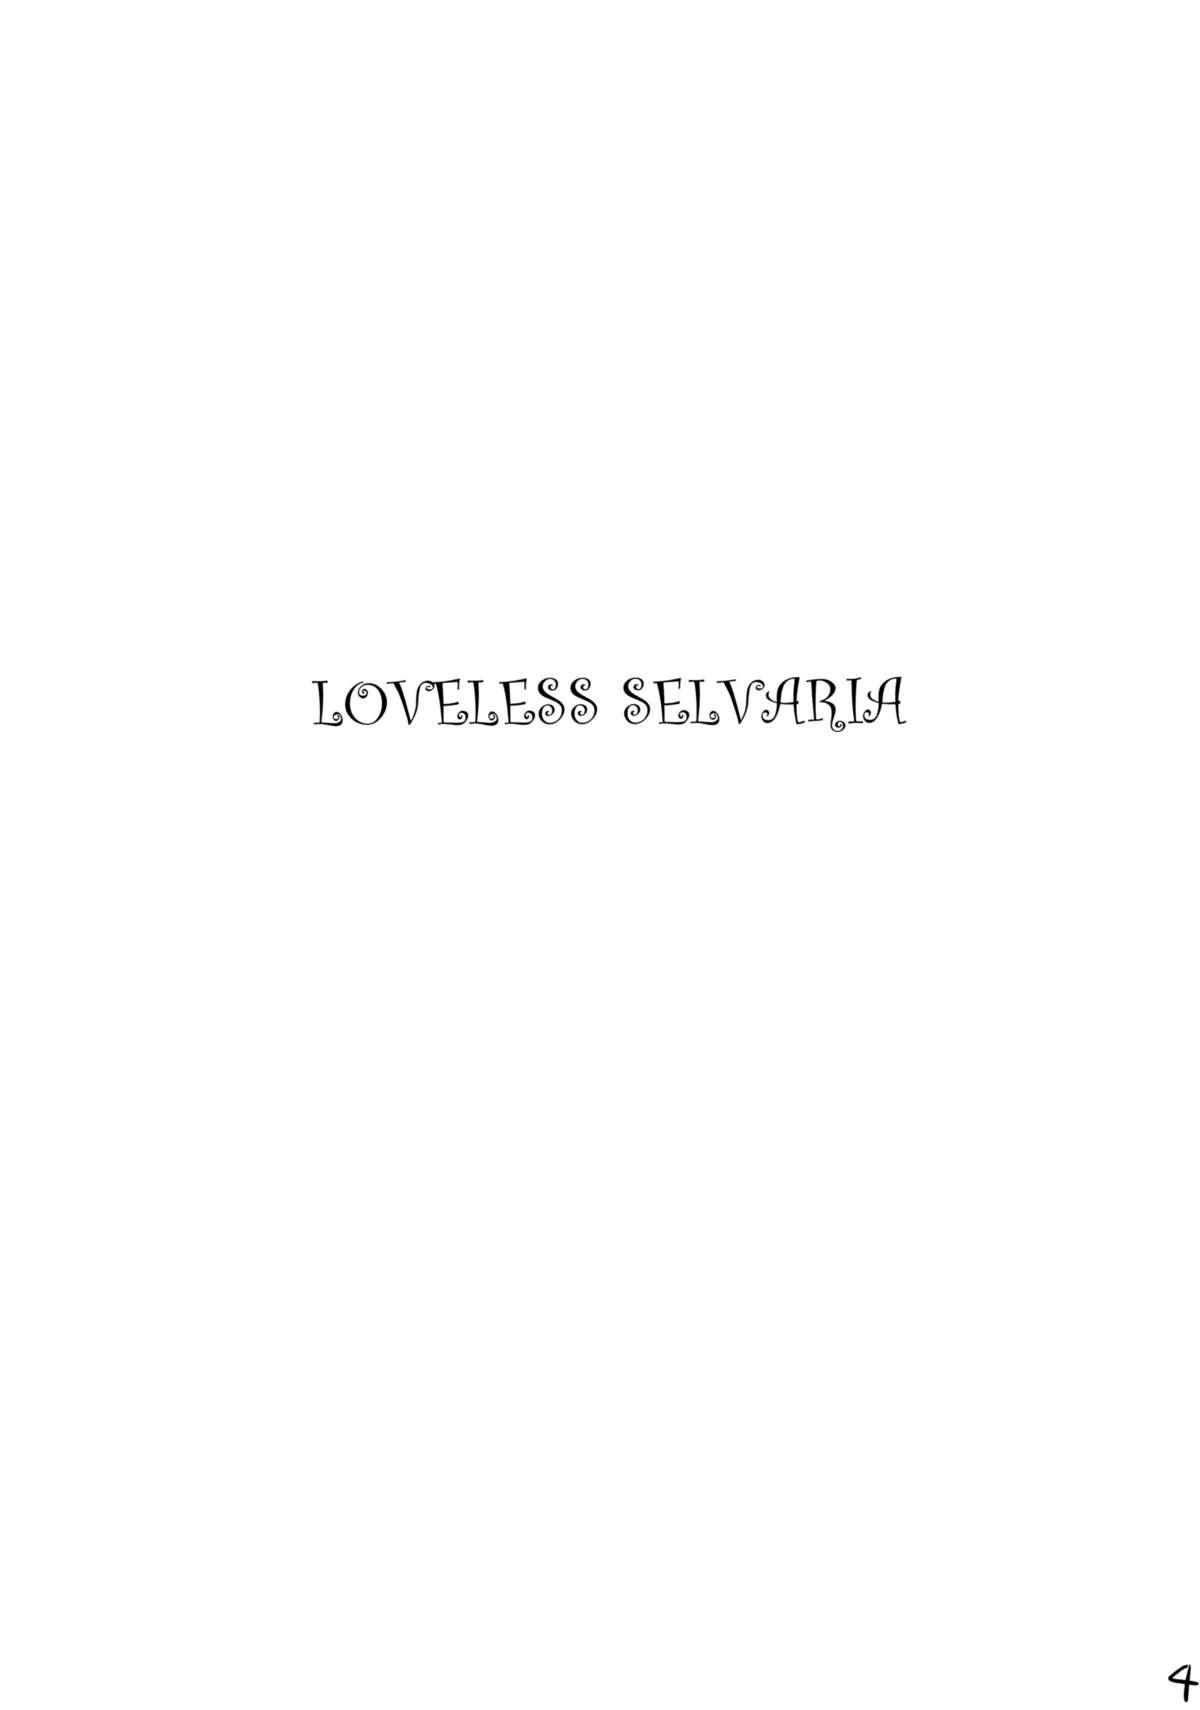 Calcinha Loveless Selvaria - Valkyria chronicles Cumshots - Page 3